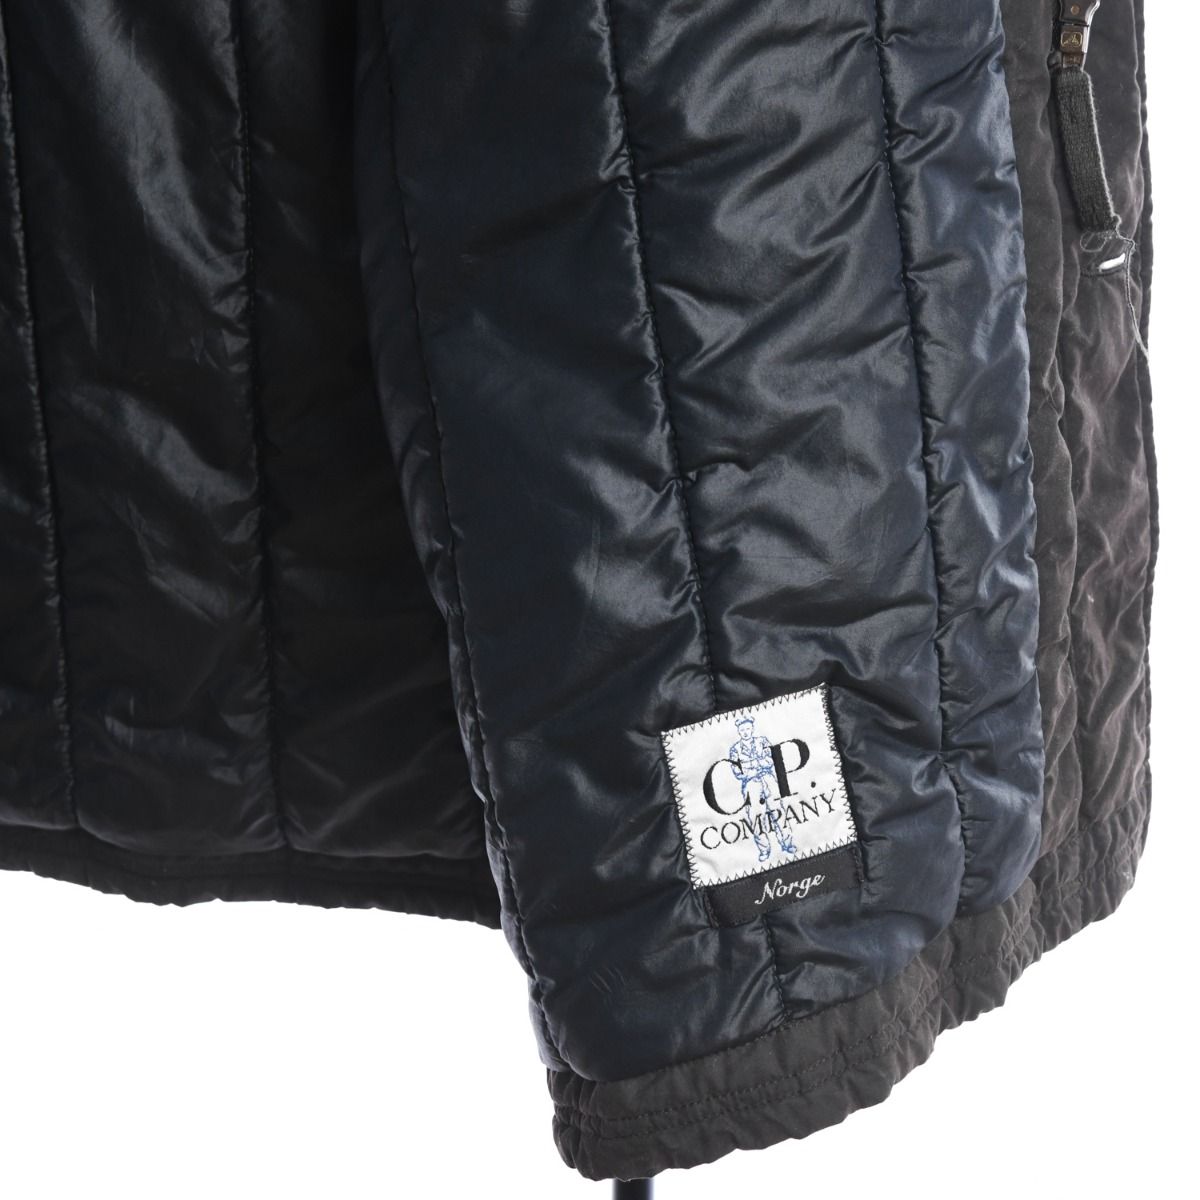 CP Company AW 1994 Norge Parka Jacket